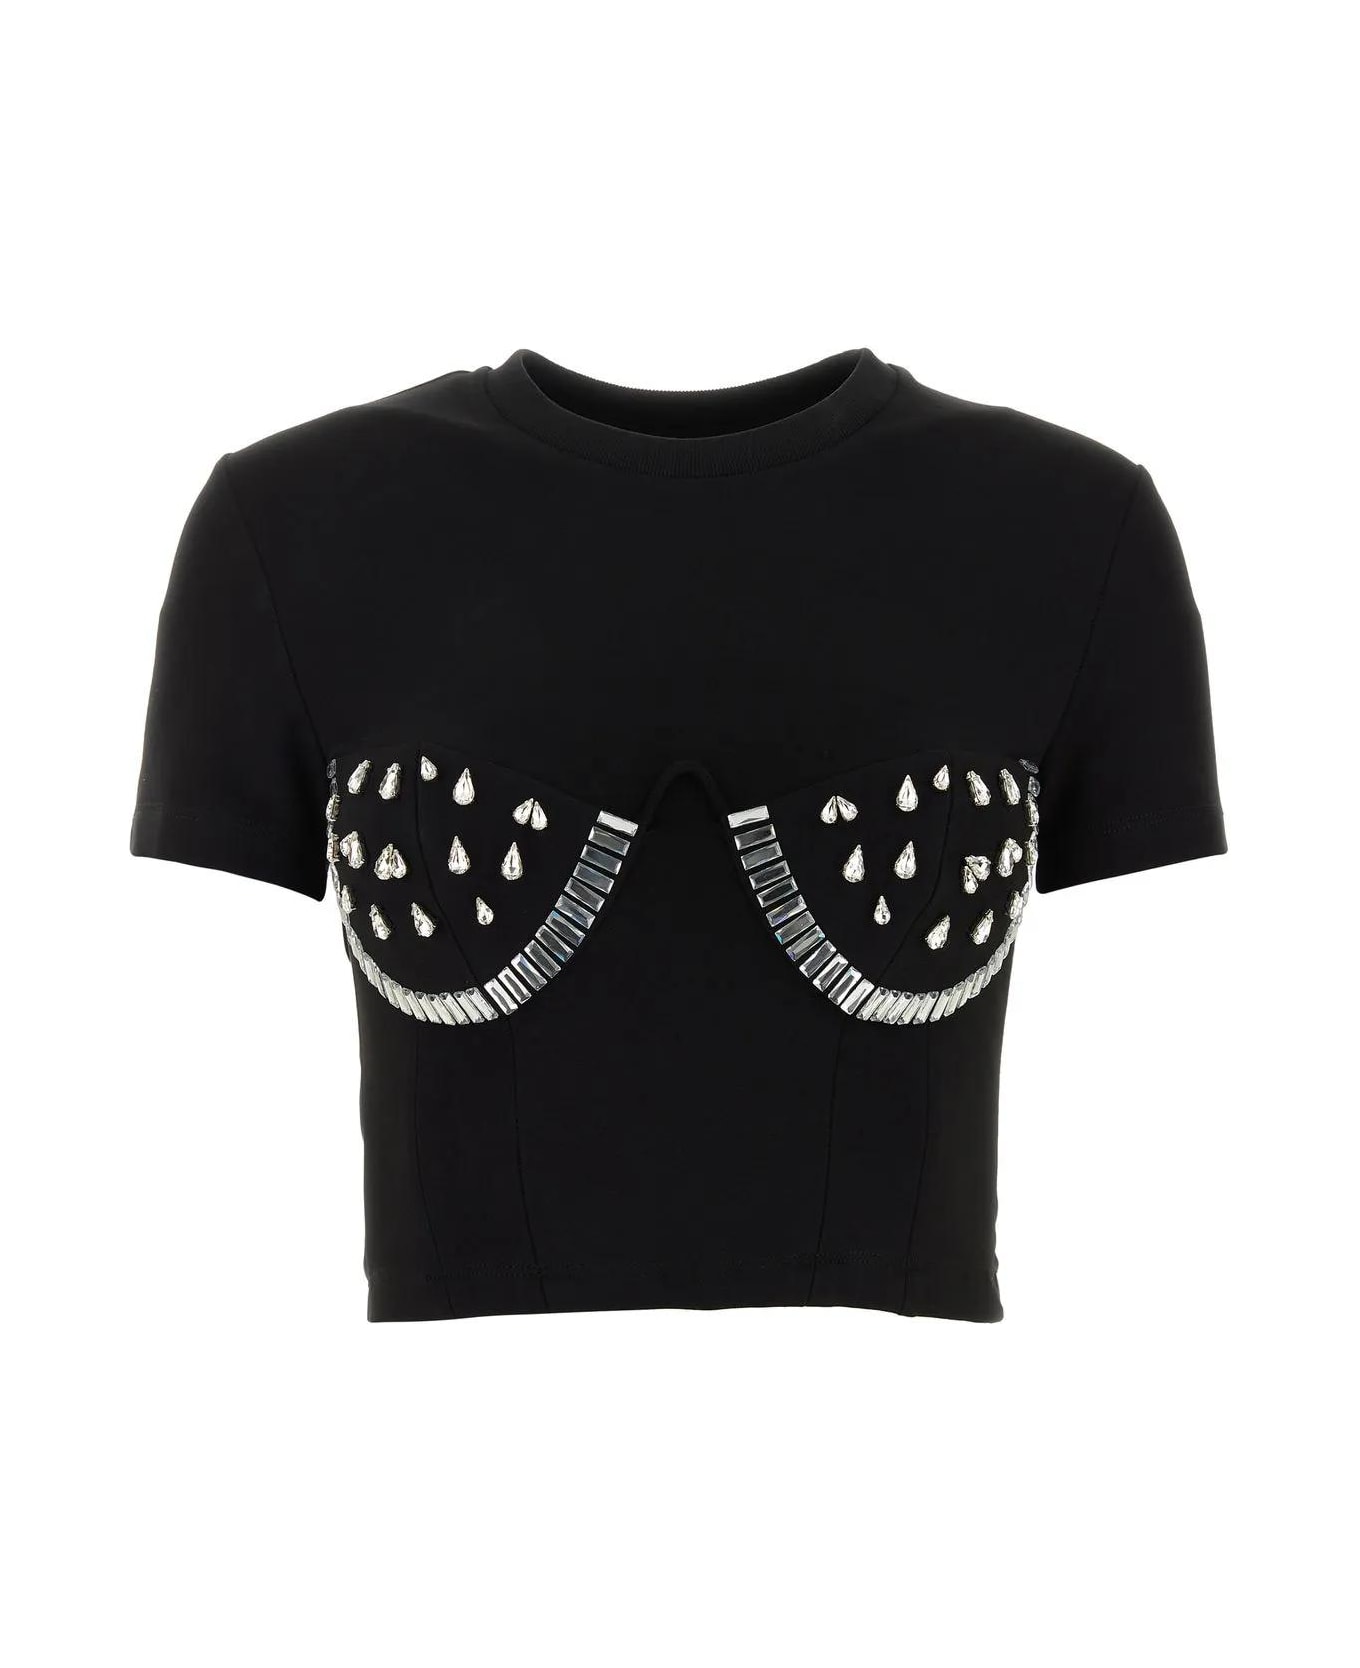 AREA Black Jersey T-shirt - Black Tシャツ